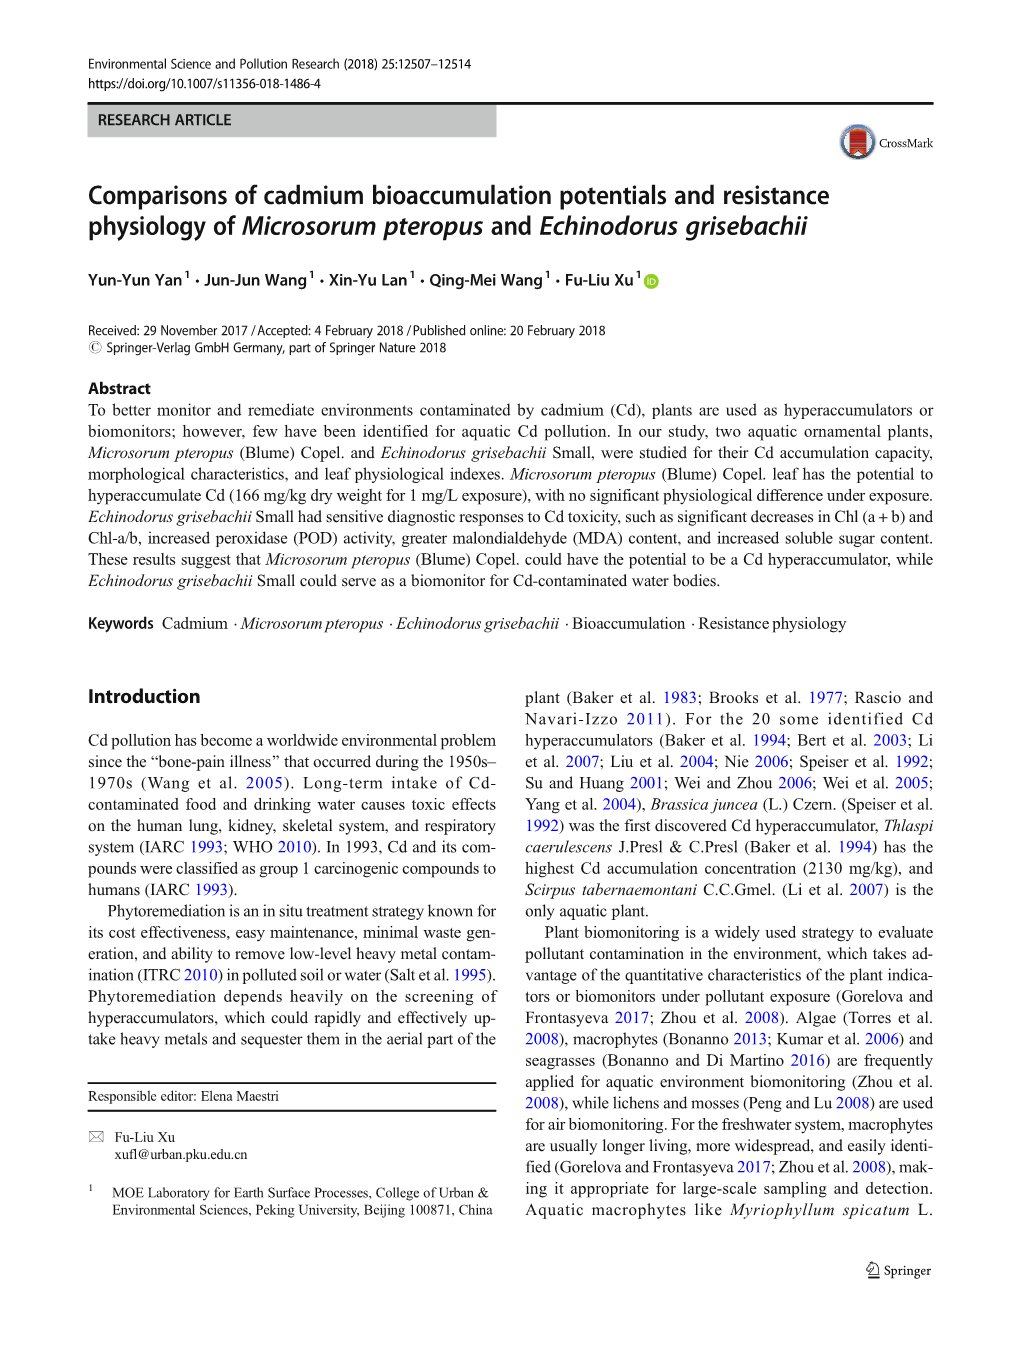 Comparisons of Cadmium Bioaccumulation Potentials and Resistance Physiology of Microsorum Pteropus and Echinodorus Grisebachii